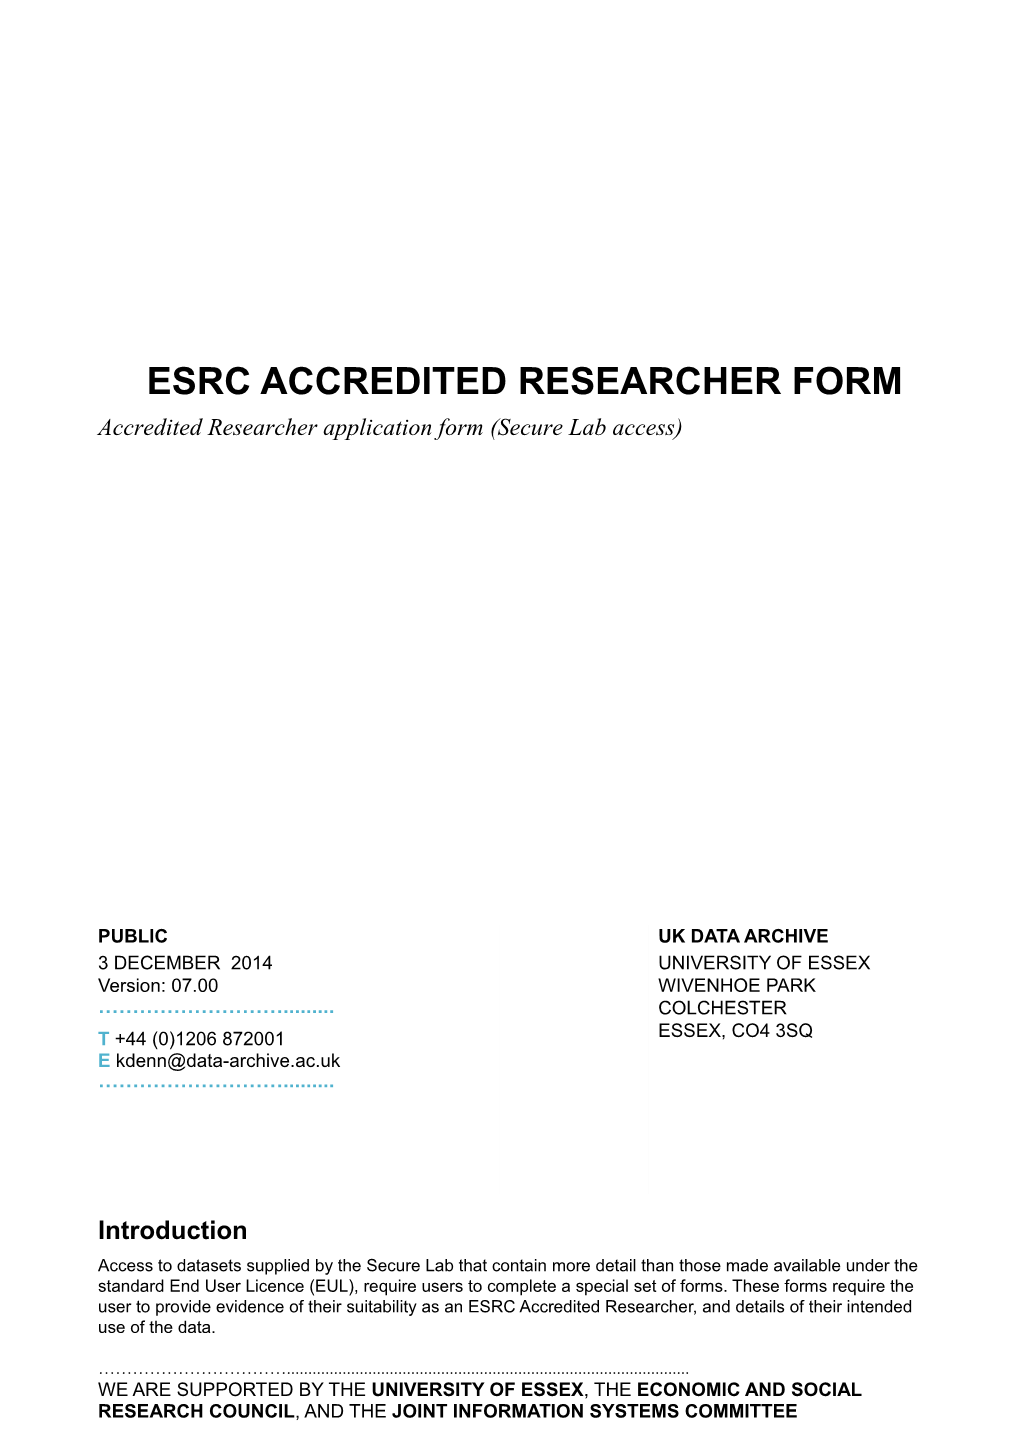 ESRC Accredited Researcher Form - Secure Data Service